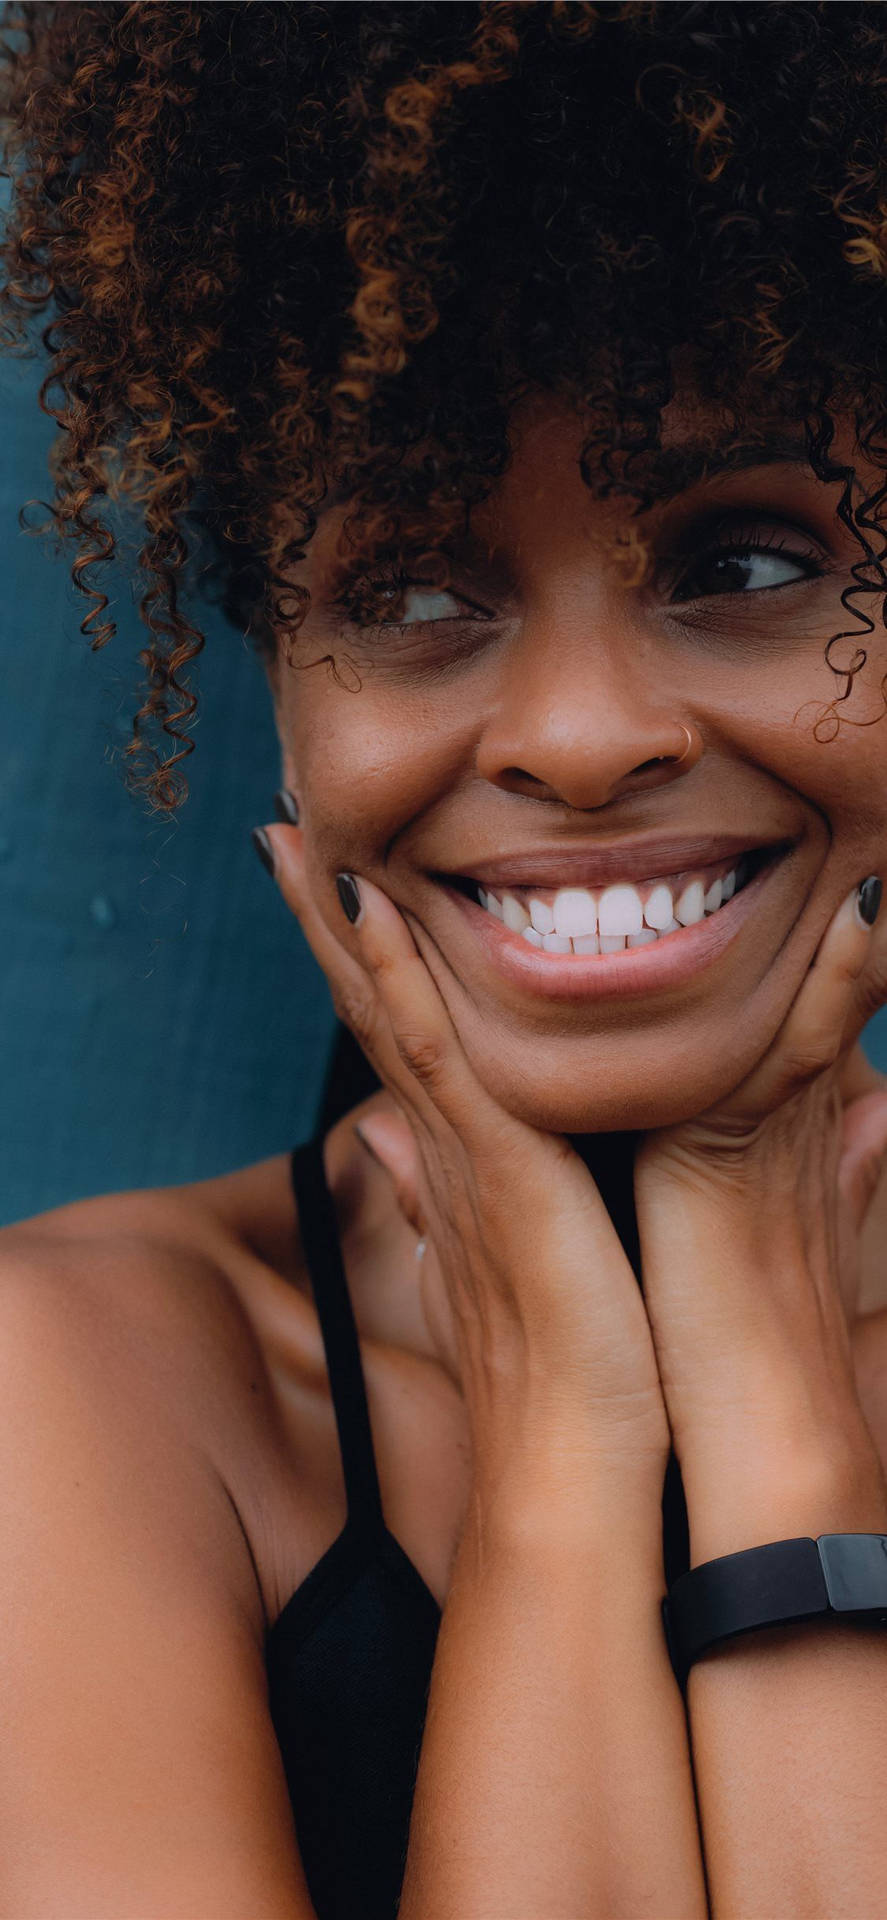 Radiant Smile Of A Black Girl Background